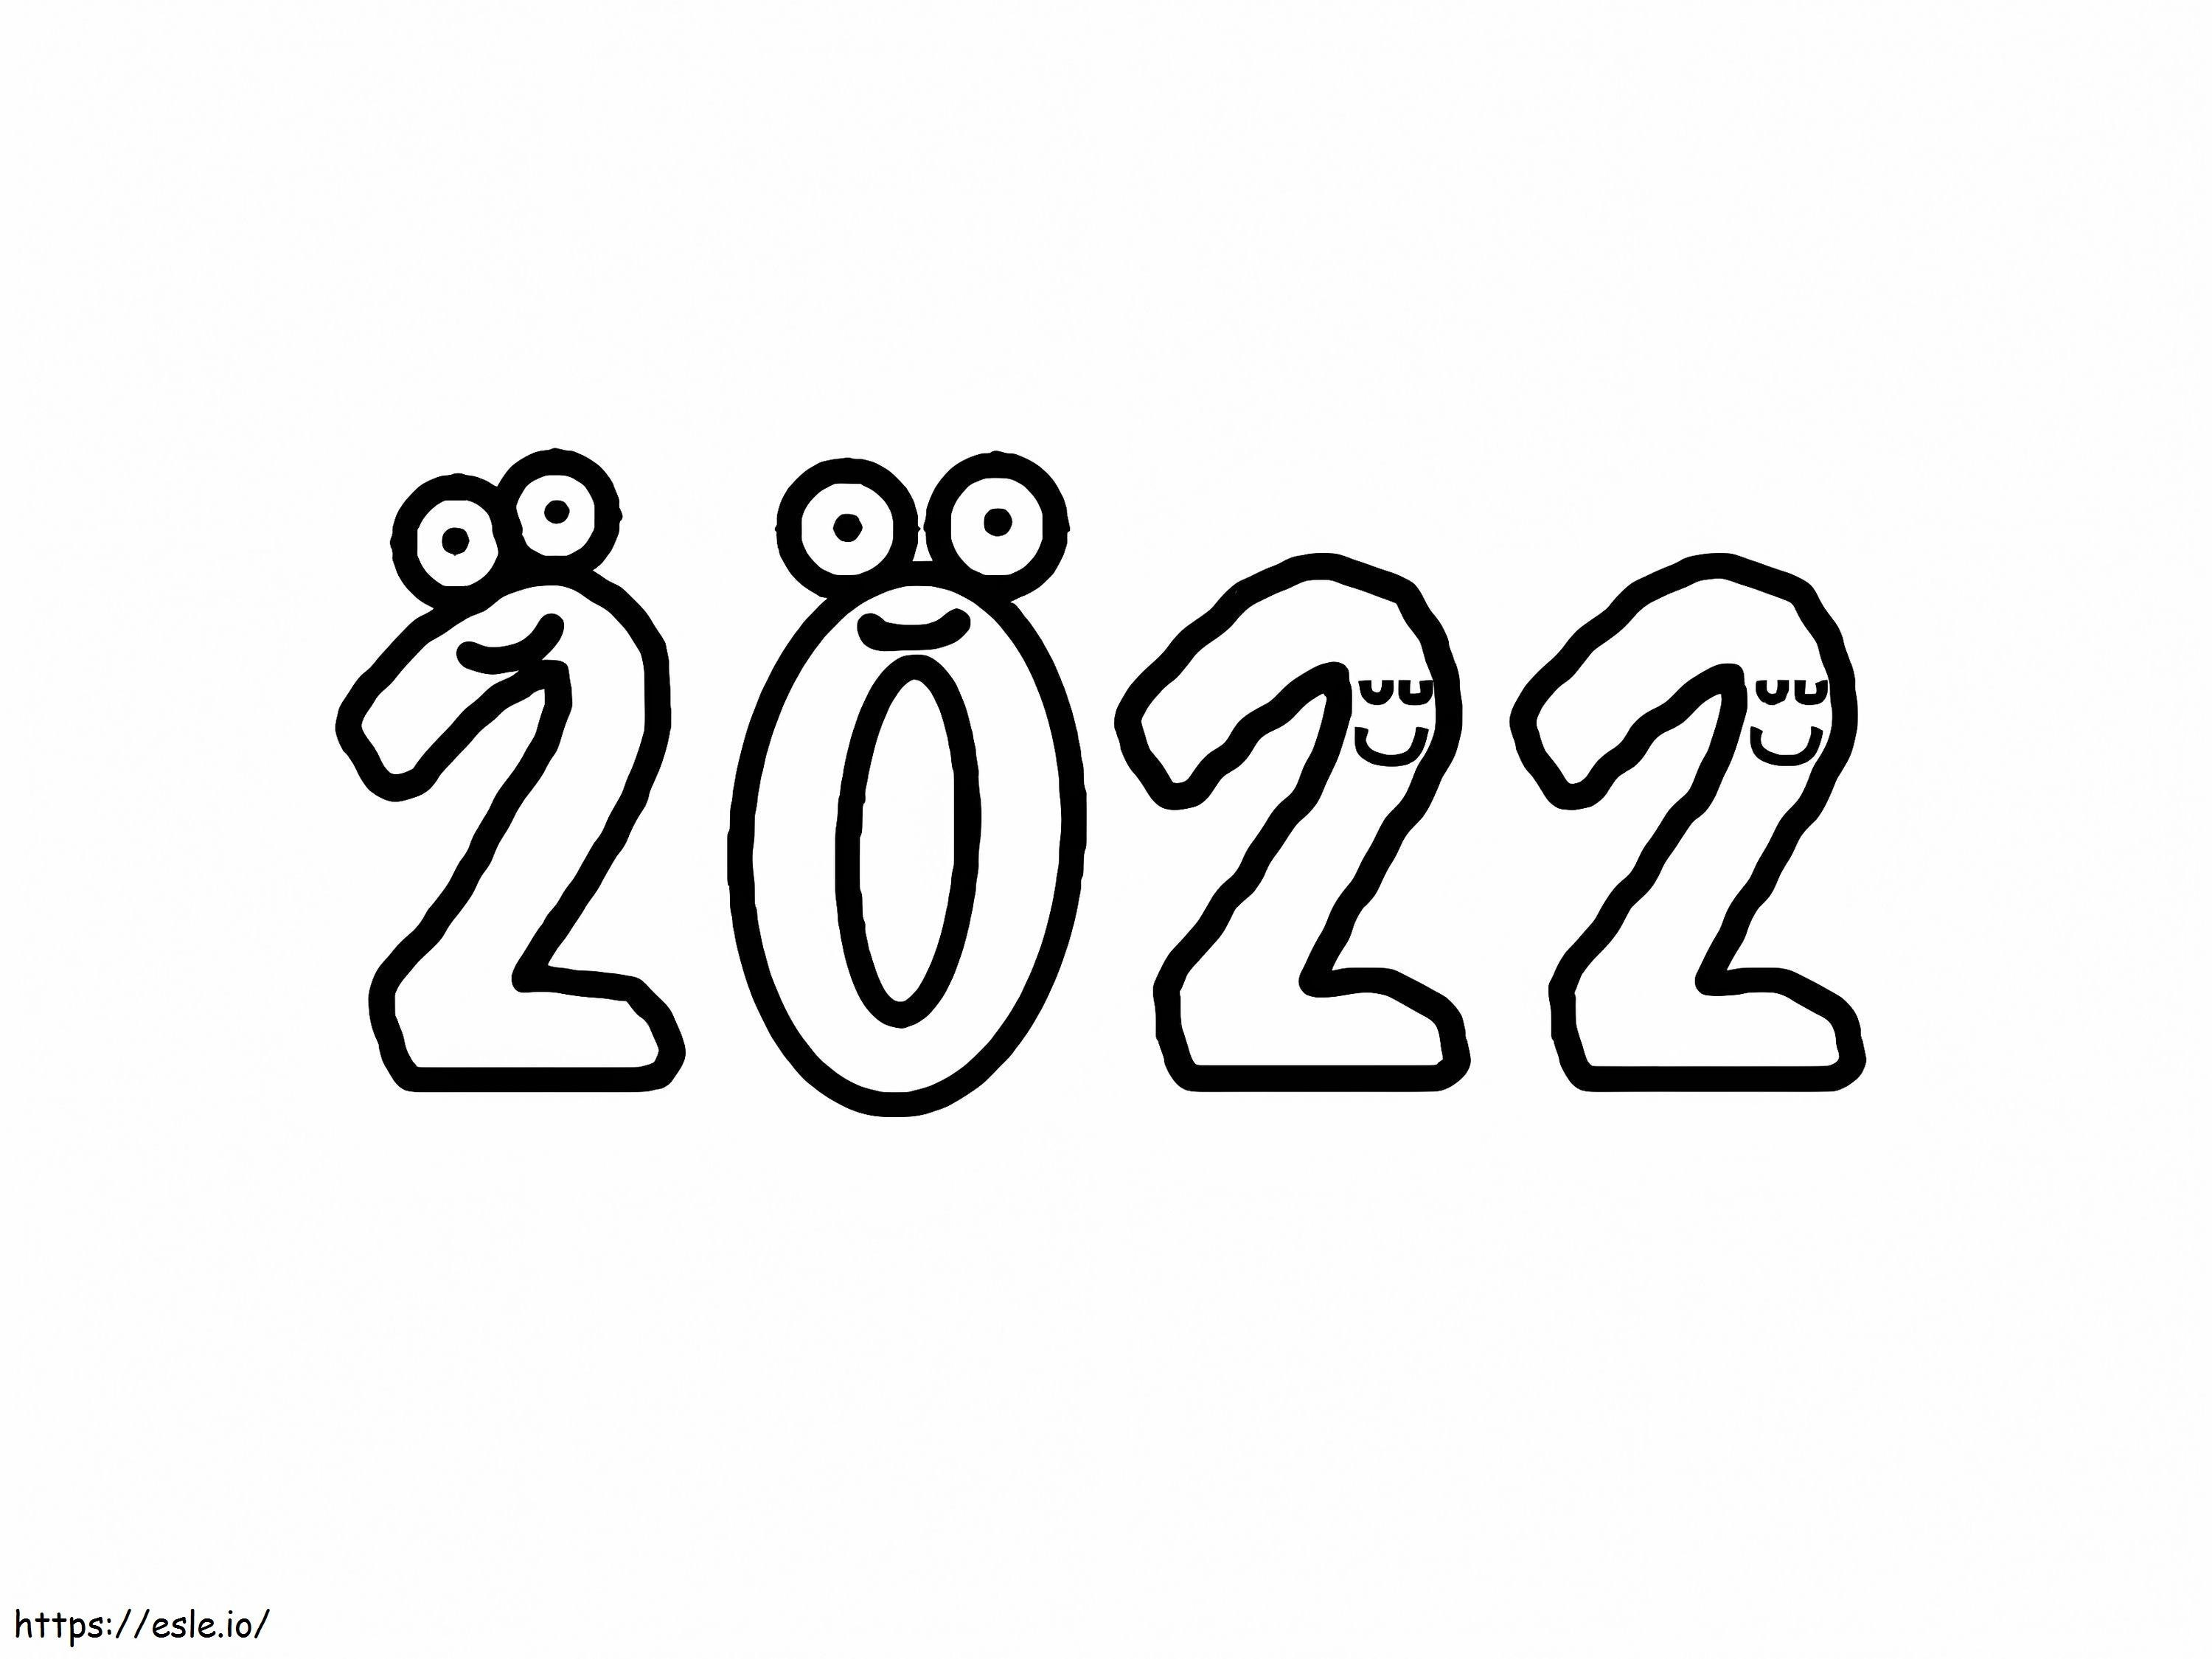 Tahun Baru 2022 Gambar Mewarnai